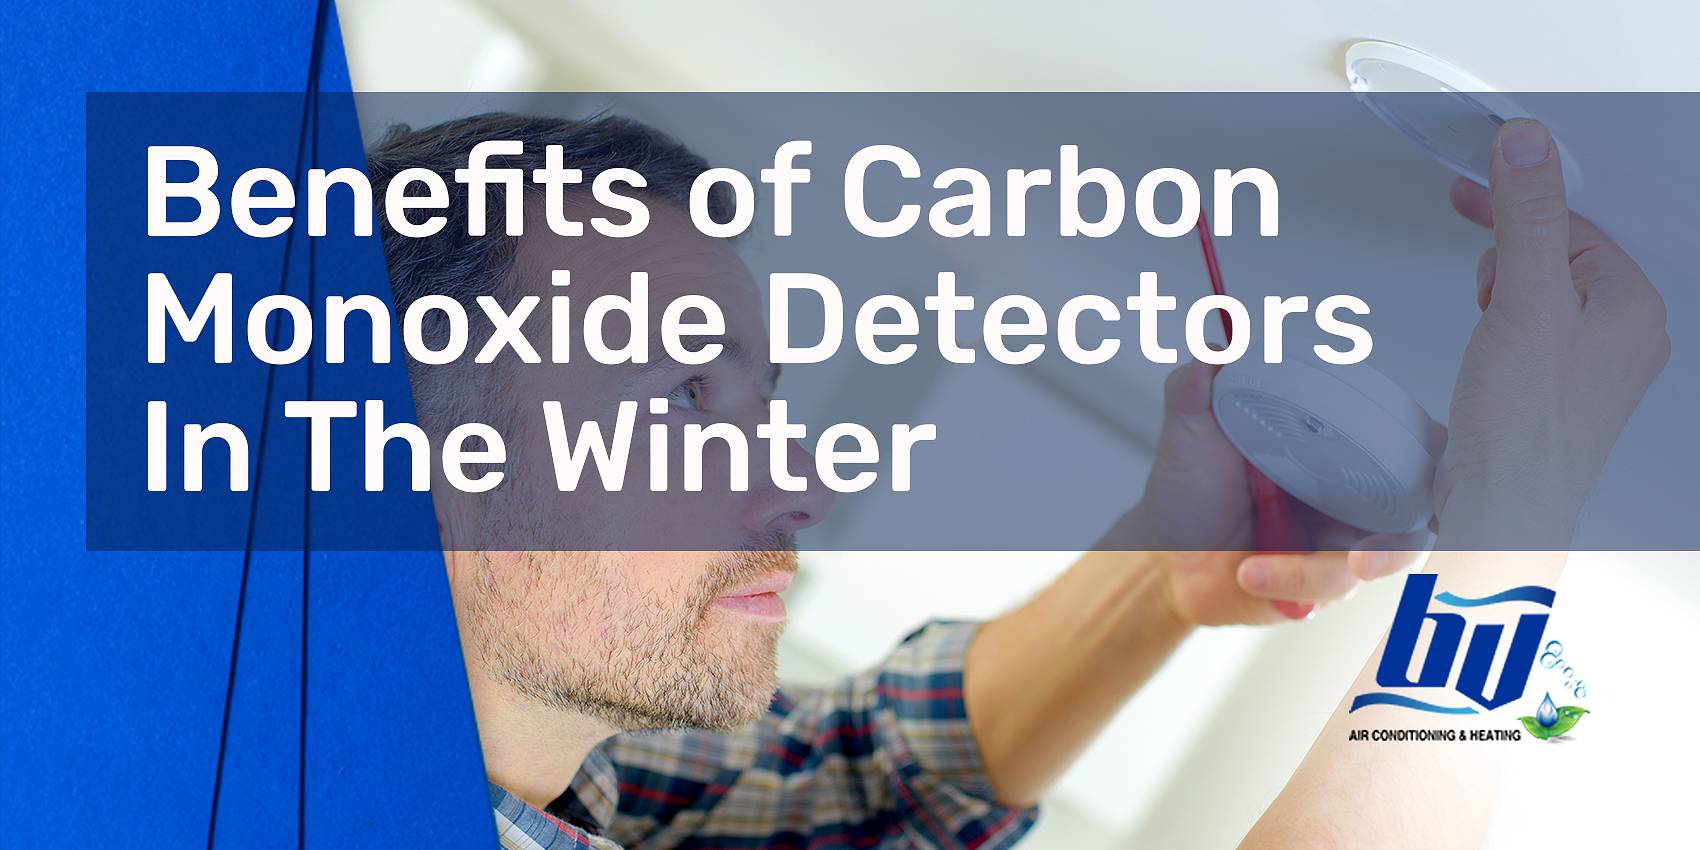 Benefits of Carbon Monoxide Detectors in the Winter - Grand Prairie, TX